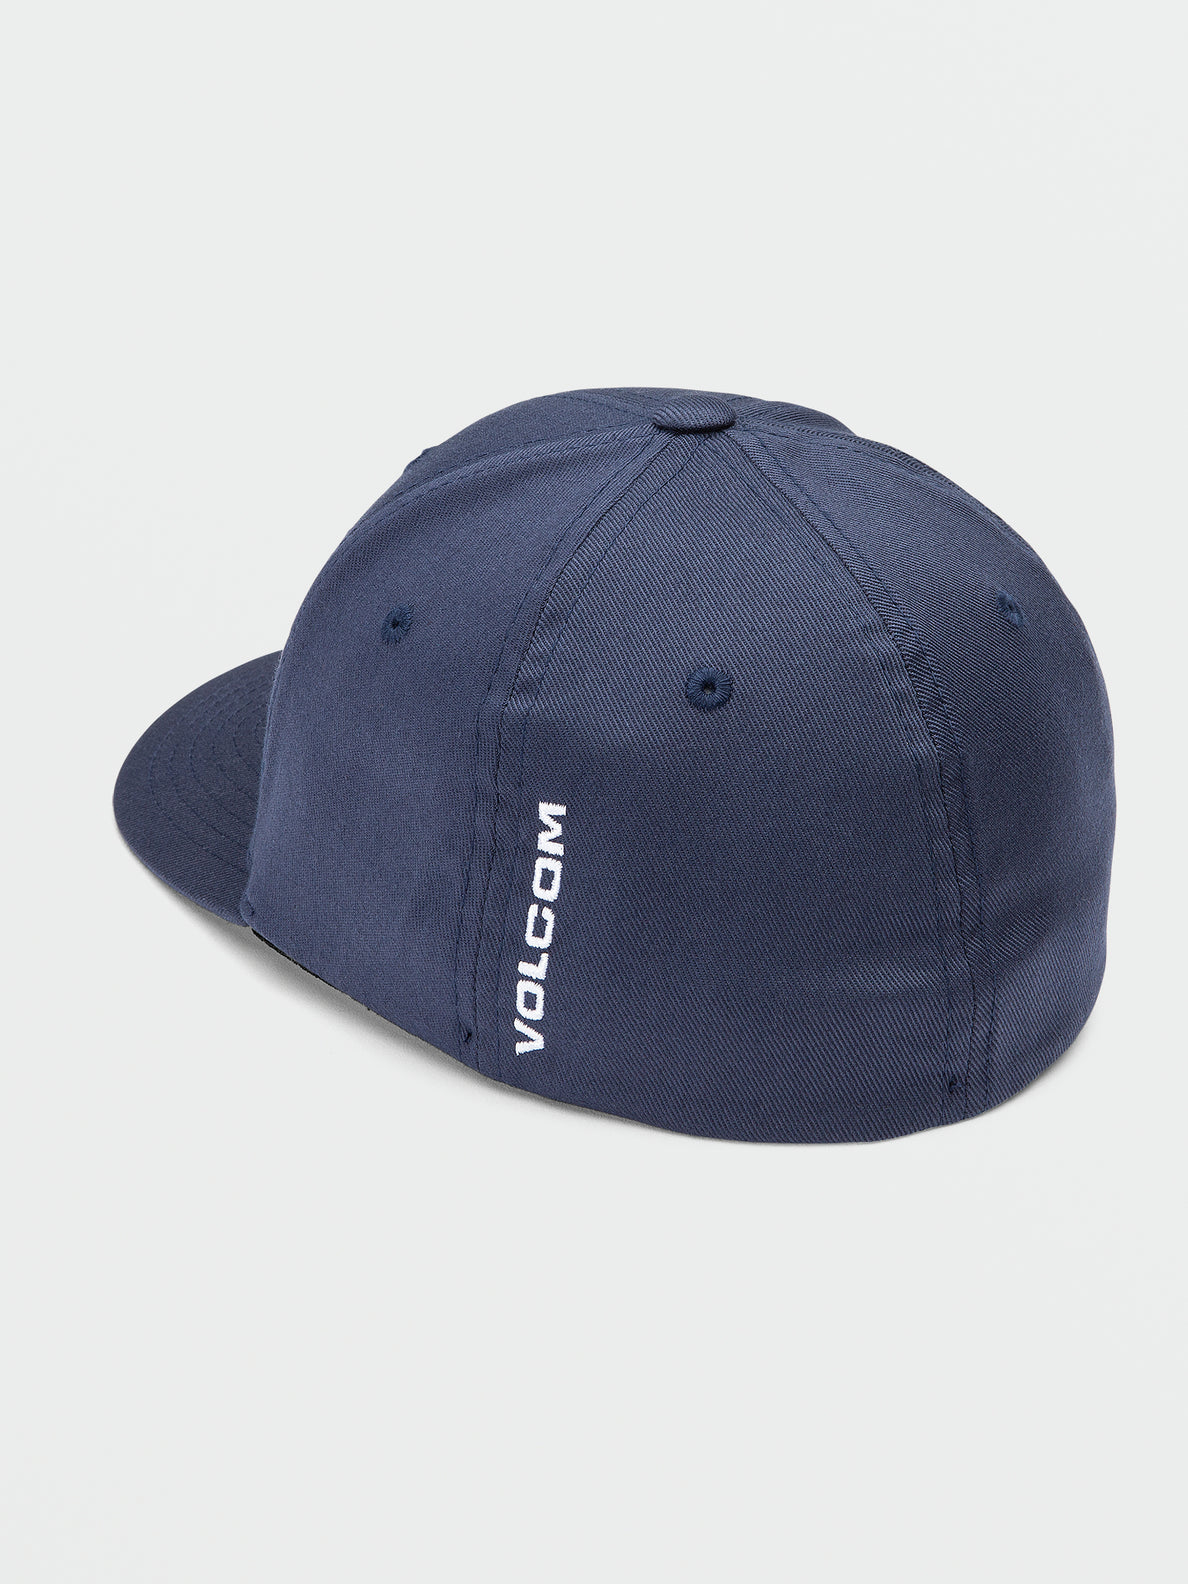 Boys Full Stone Flexfit Hat - Navy Combo